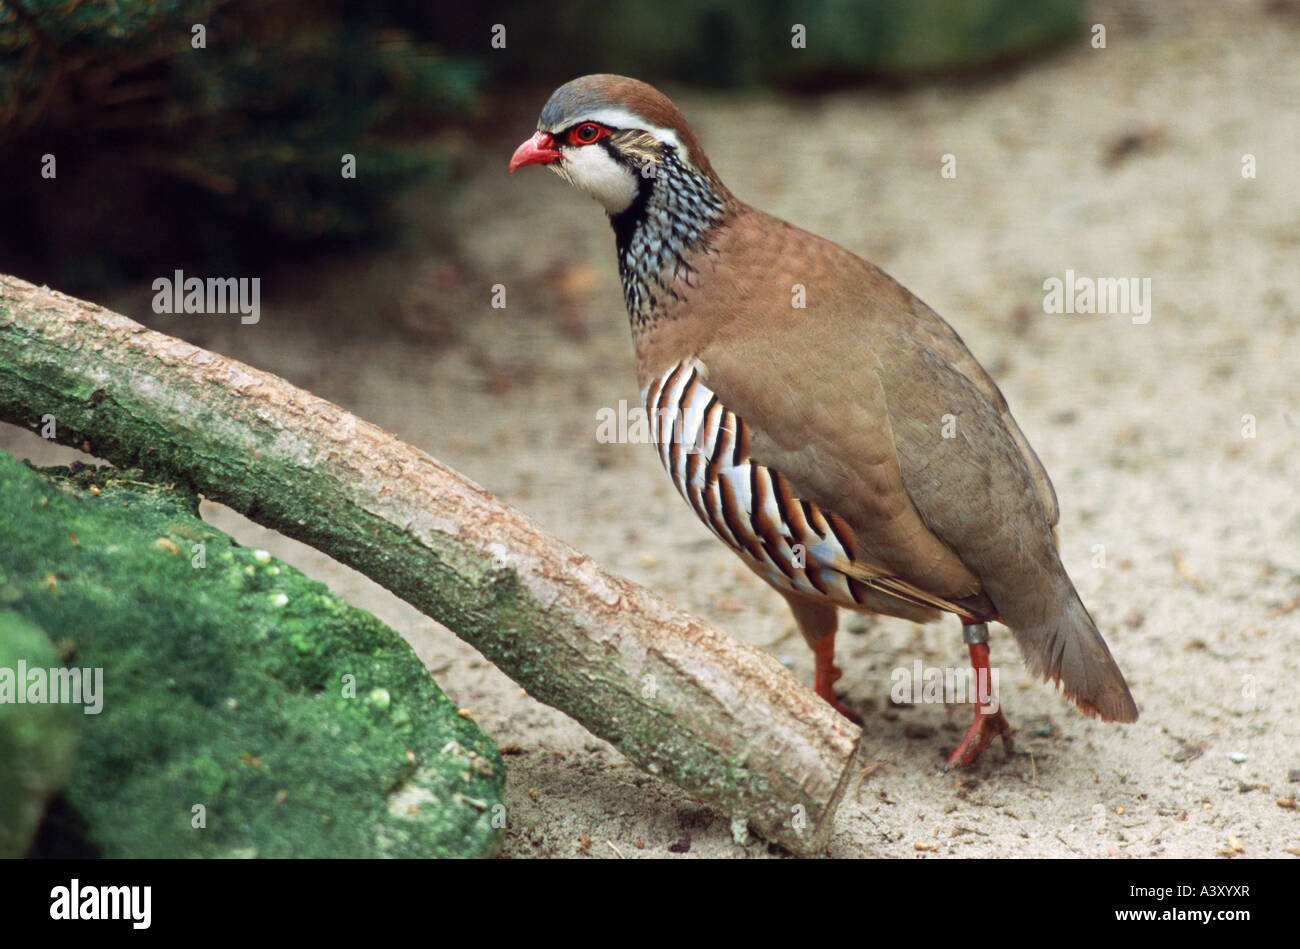 zoology / animals, avian / birds, Rock Partridge, (Alectoris graeca), walking in sand, distribution: Europe, animal, bird, chick Stock Photo